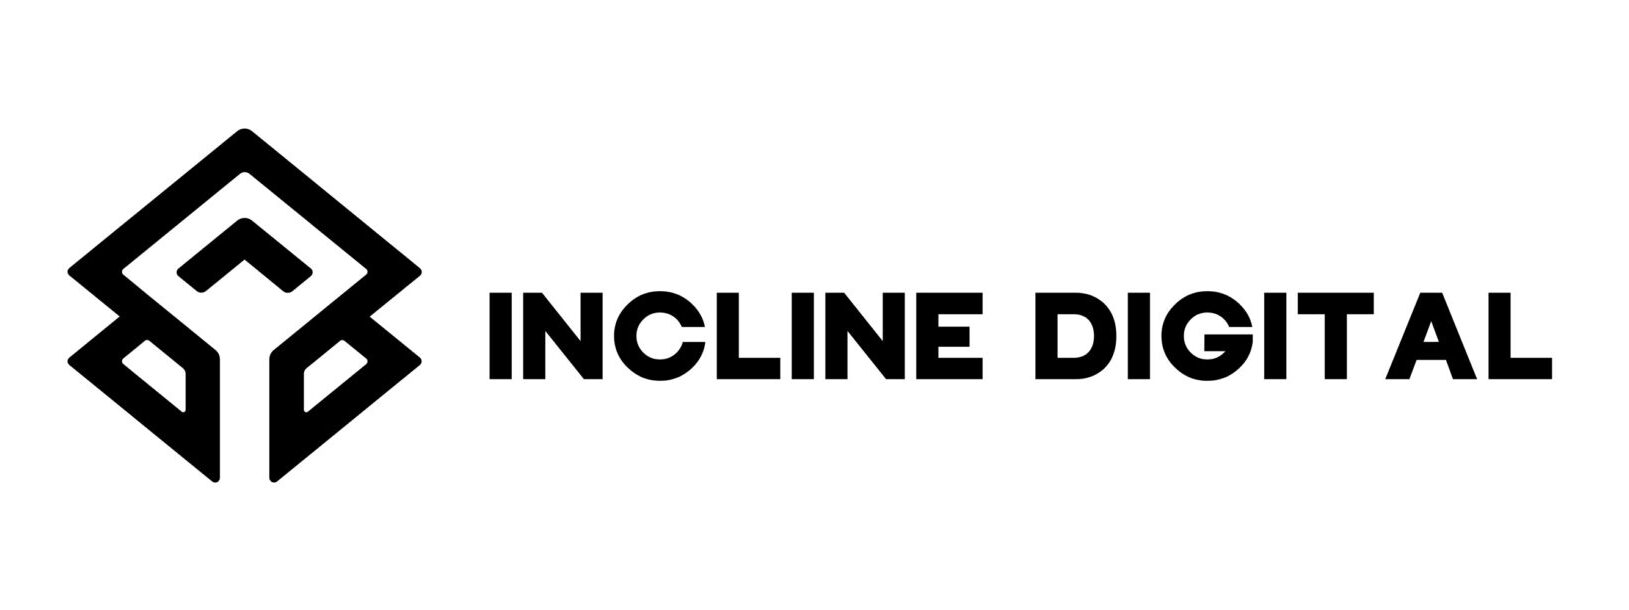 Incline Digital